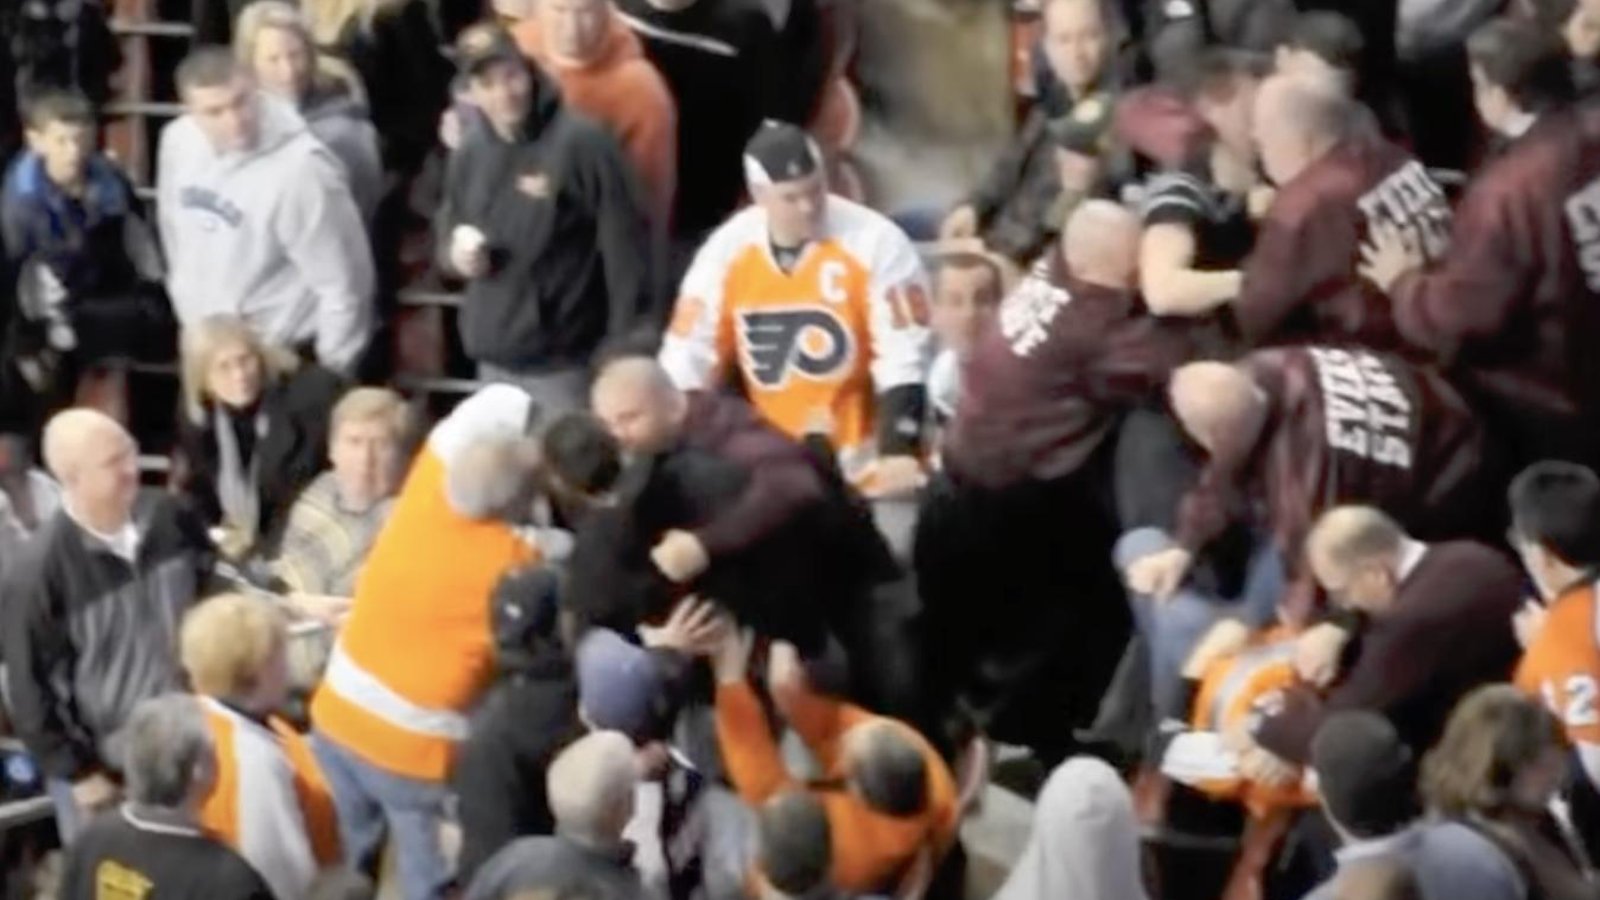 NHL fan fights caught on video